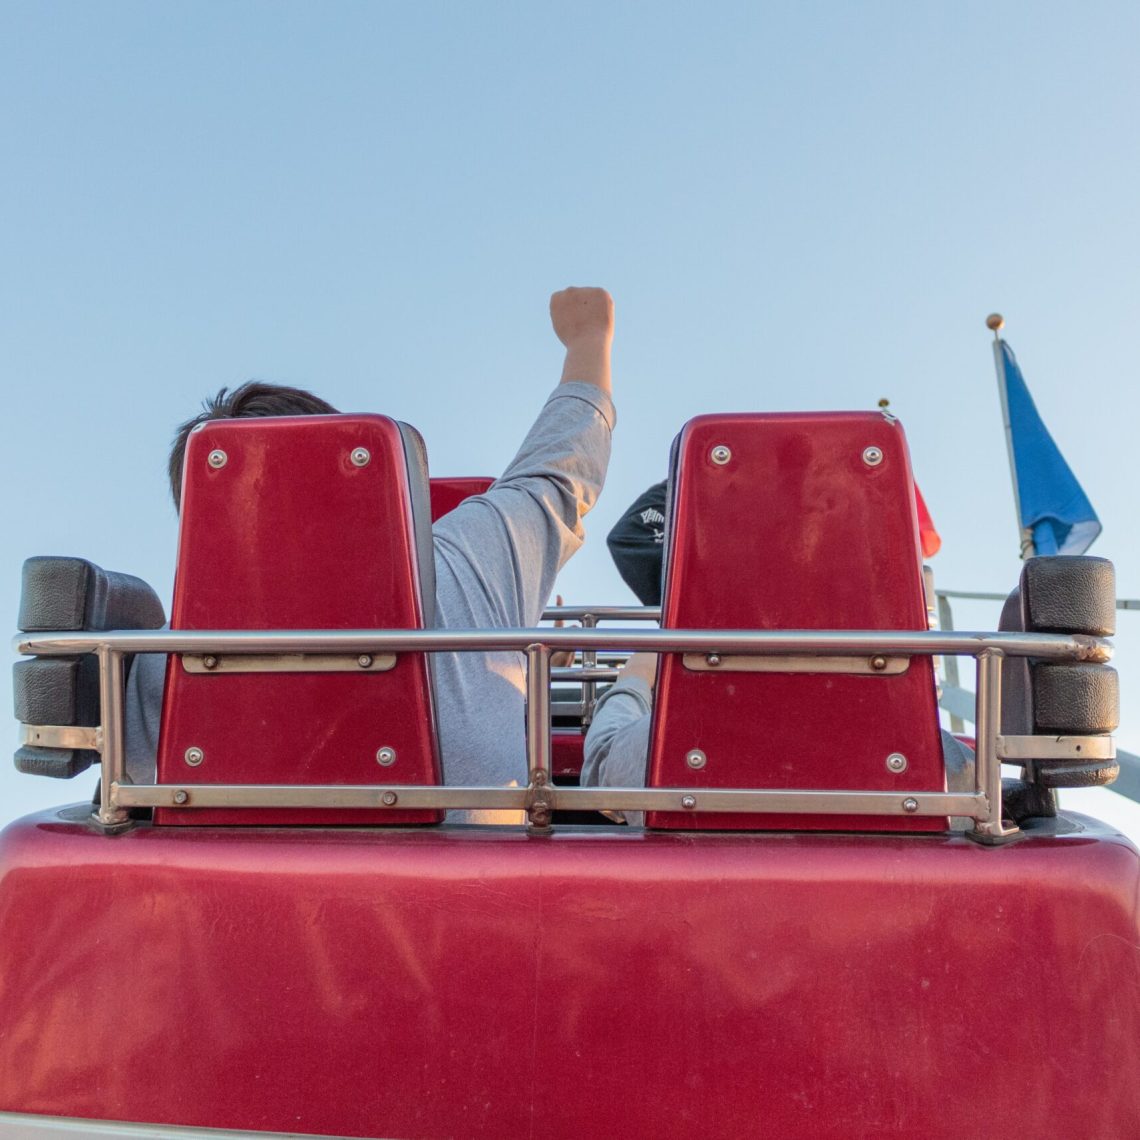 Unlock a Summer of Thrills 3 Reasons to Buy Lake Compounce Season